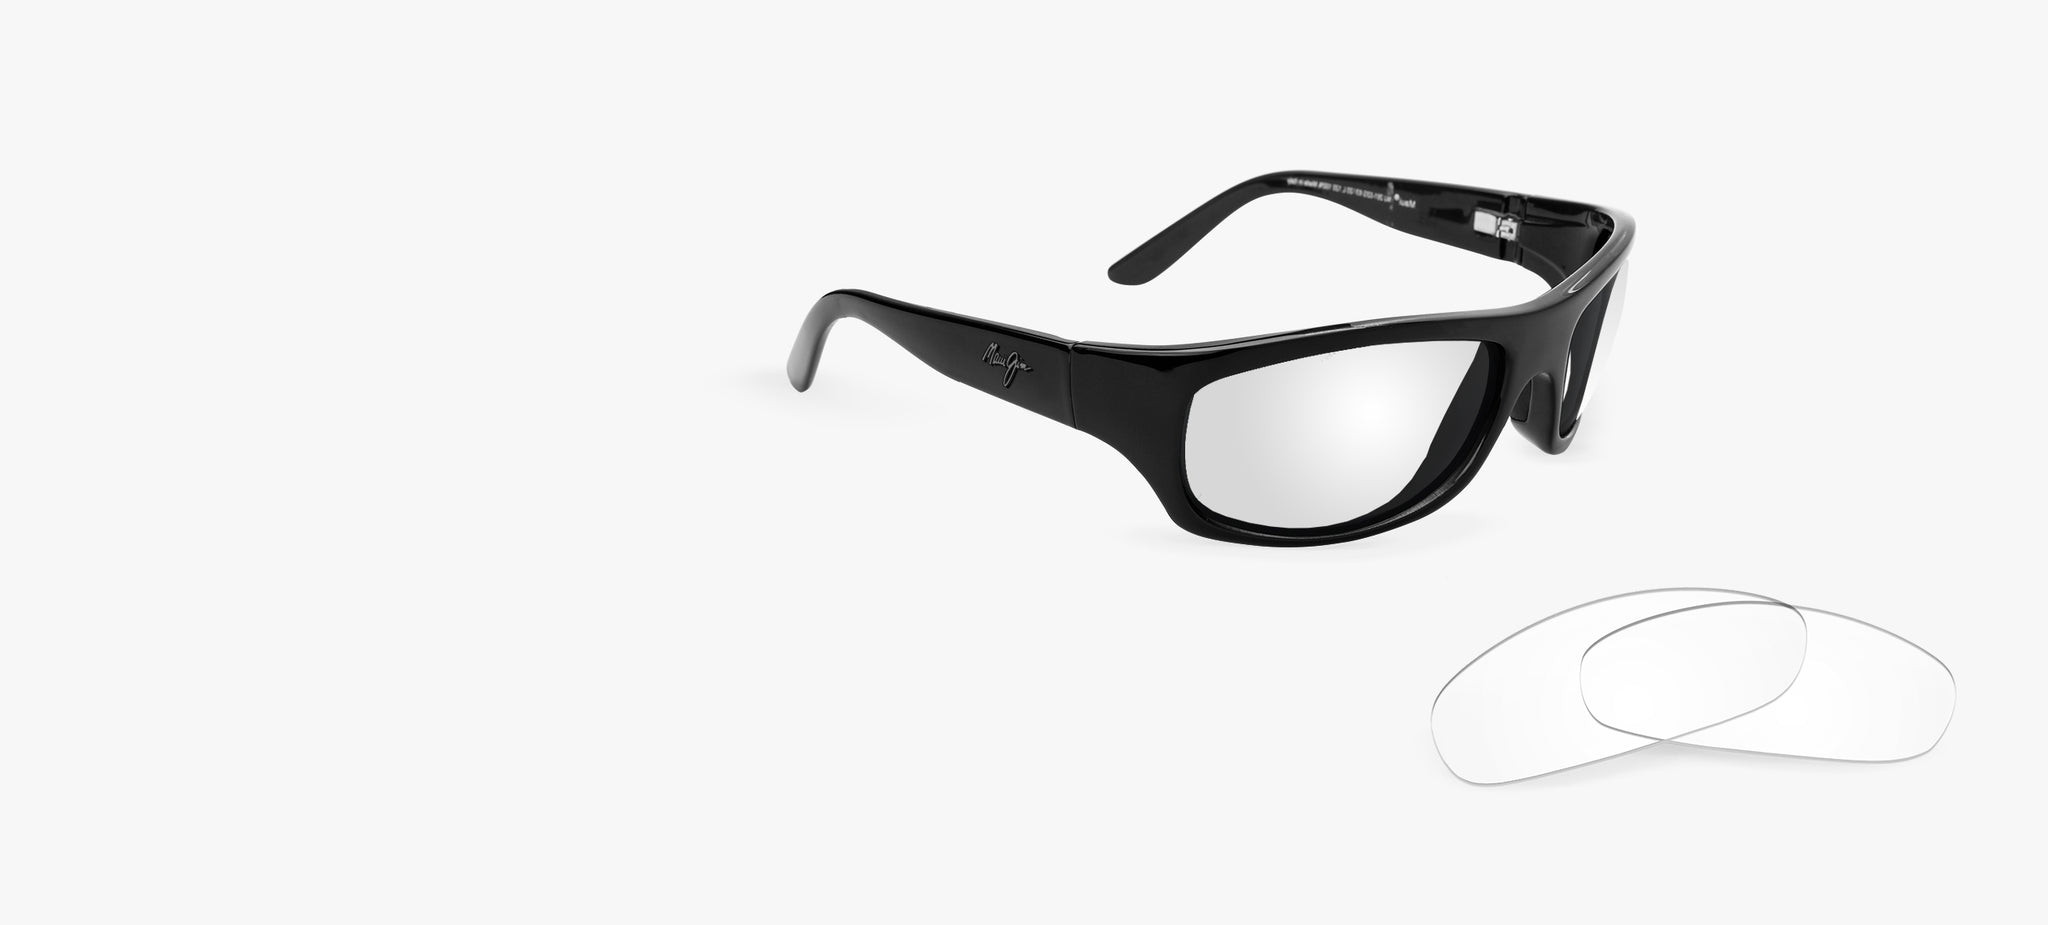 Maui Jim glasses with Revant prescription lenses